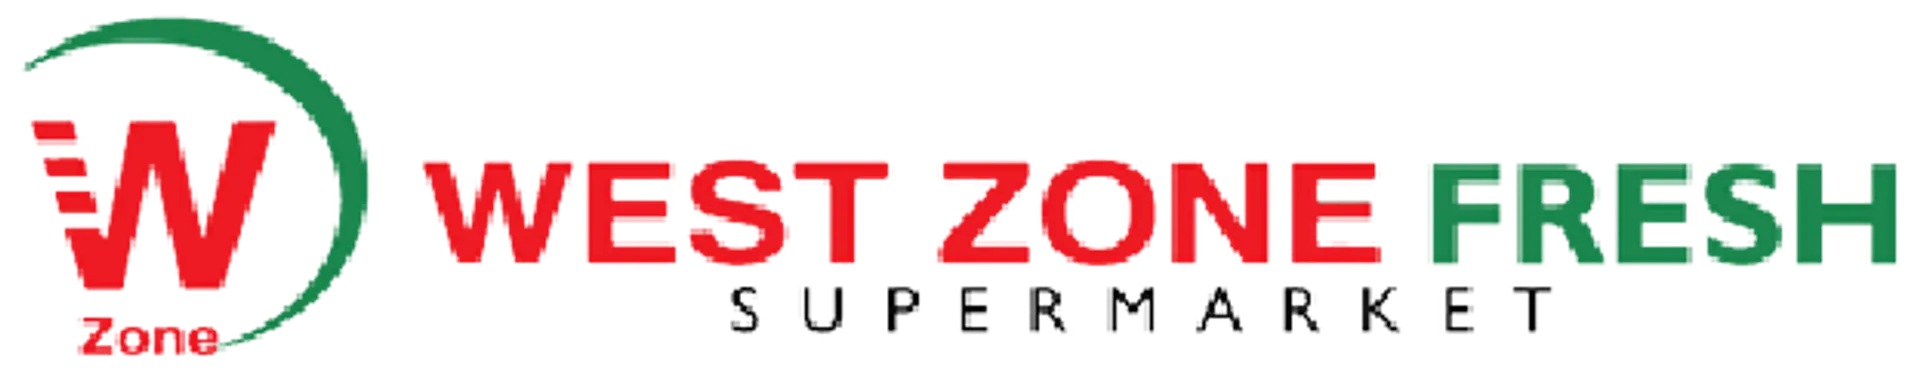 WEST ZONE SUPERMARKET logo. Current catalogue